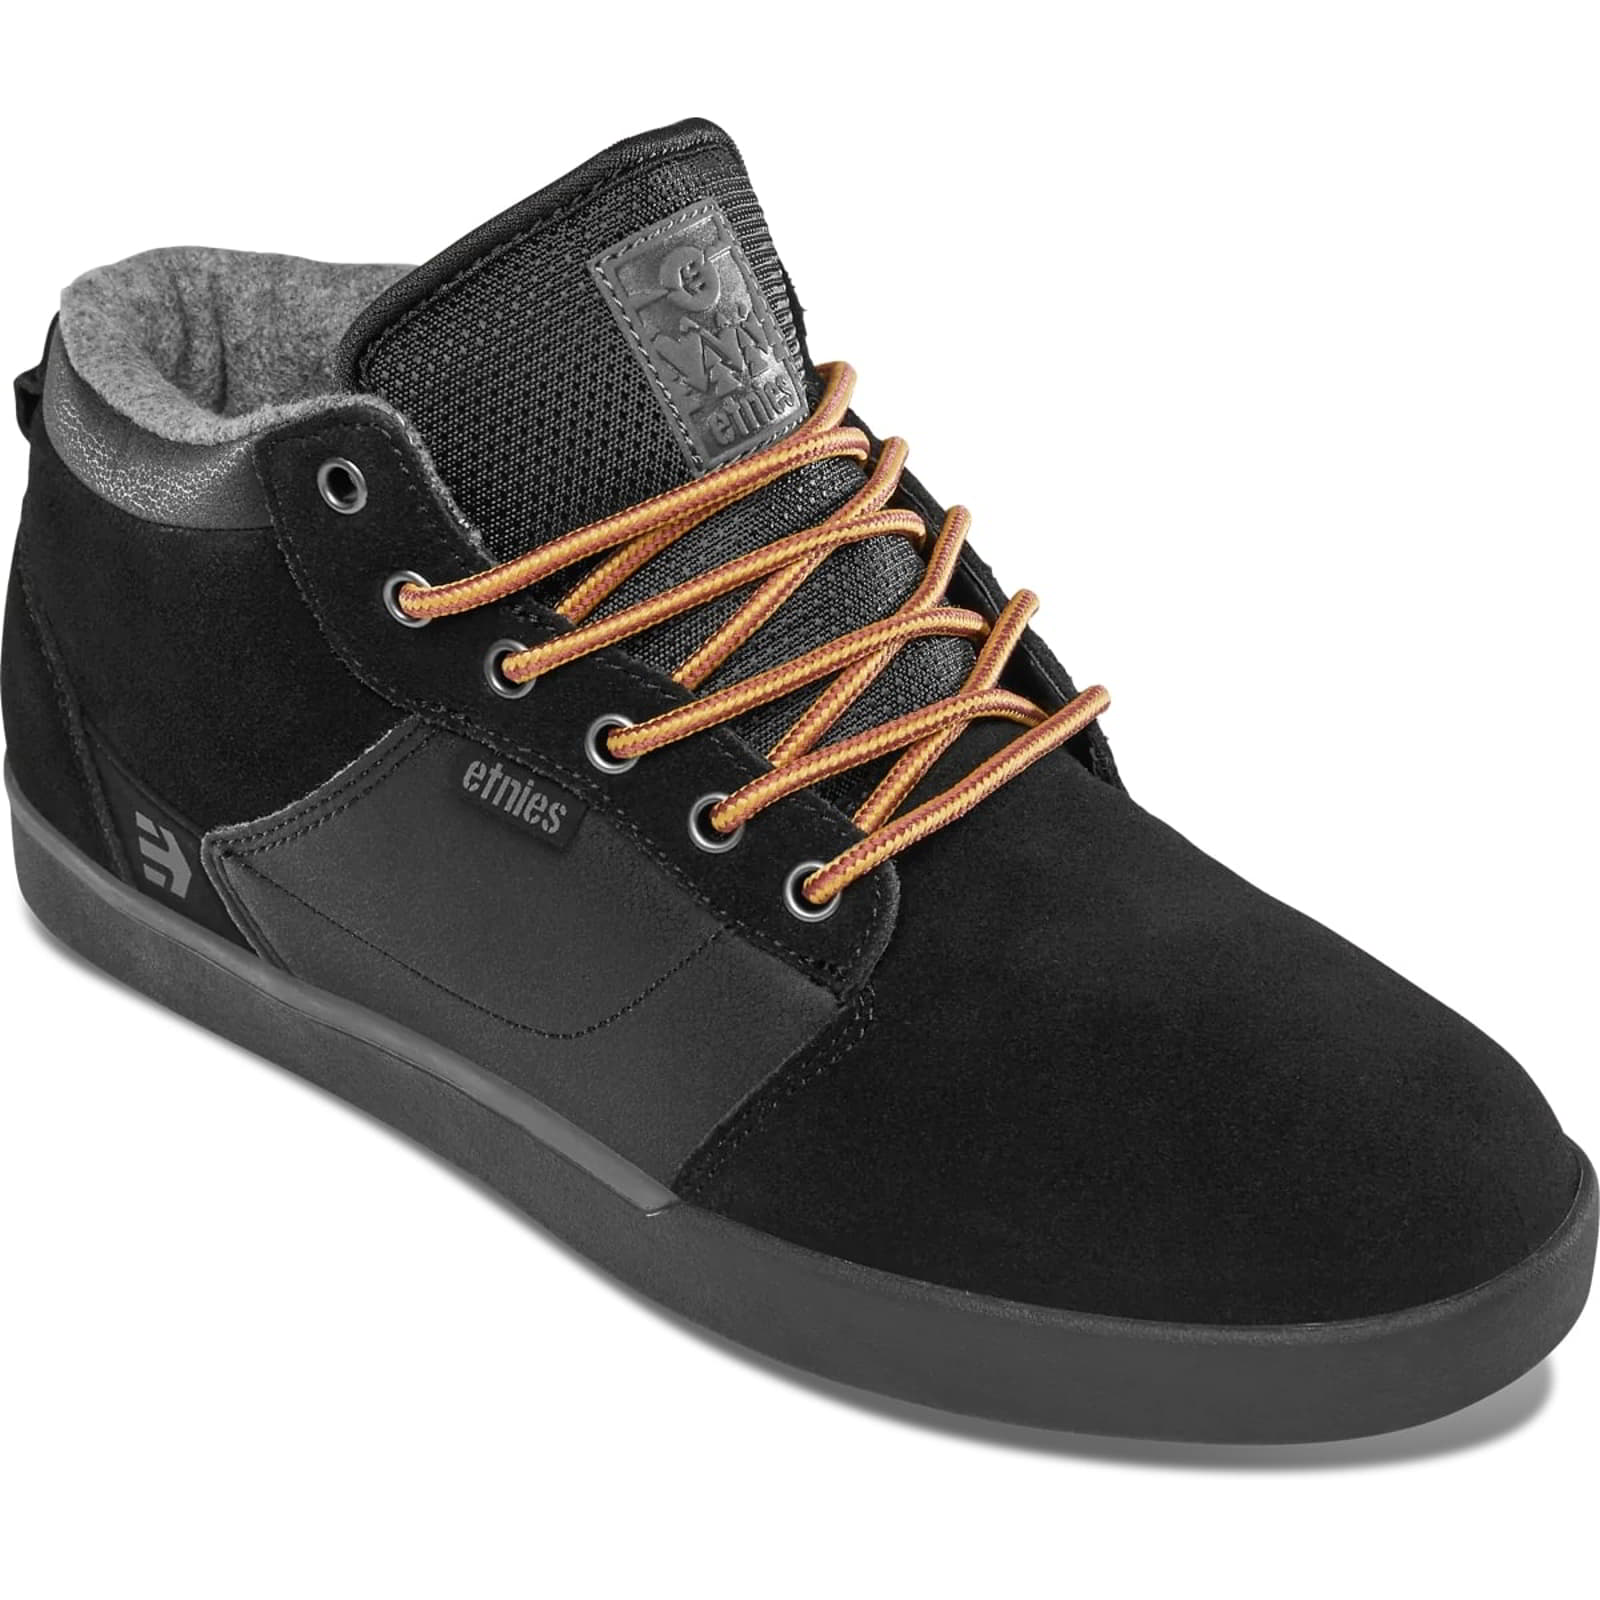 Etnies Men's Jefferson Water Resistant Skate Shoes Trainers - UK 12 / US 13